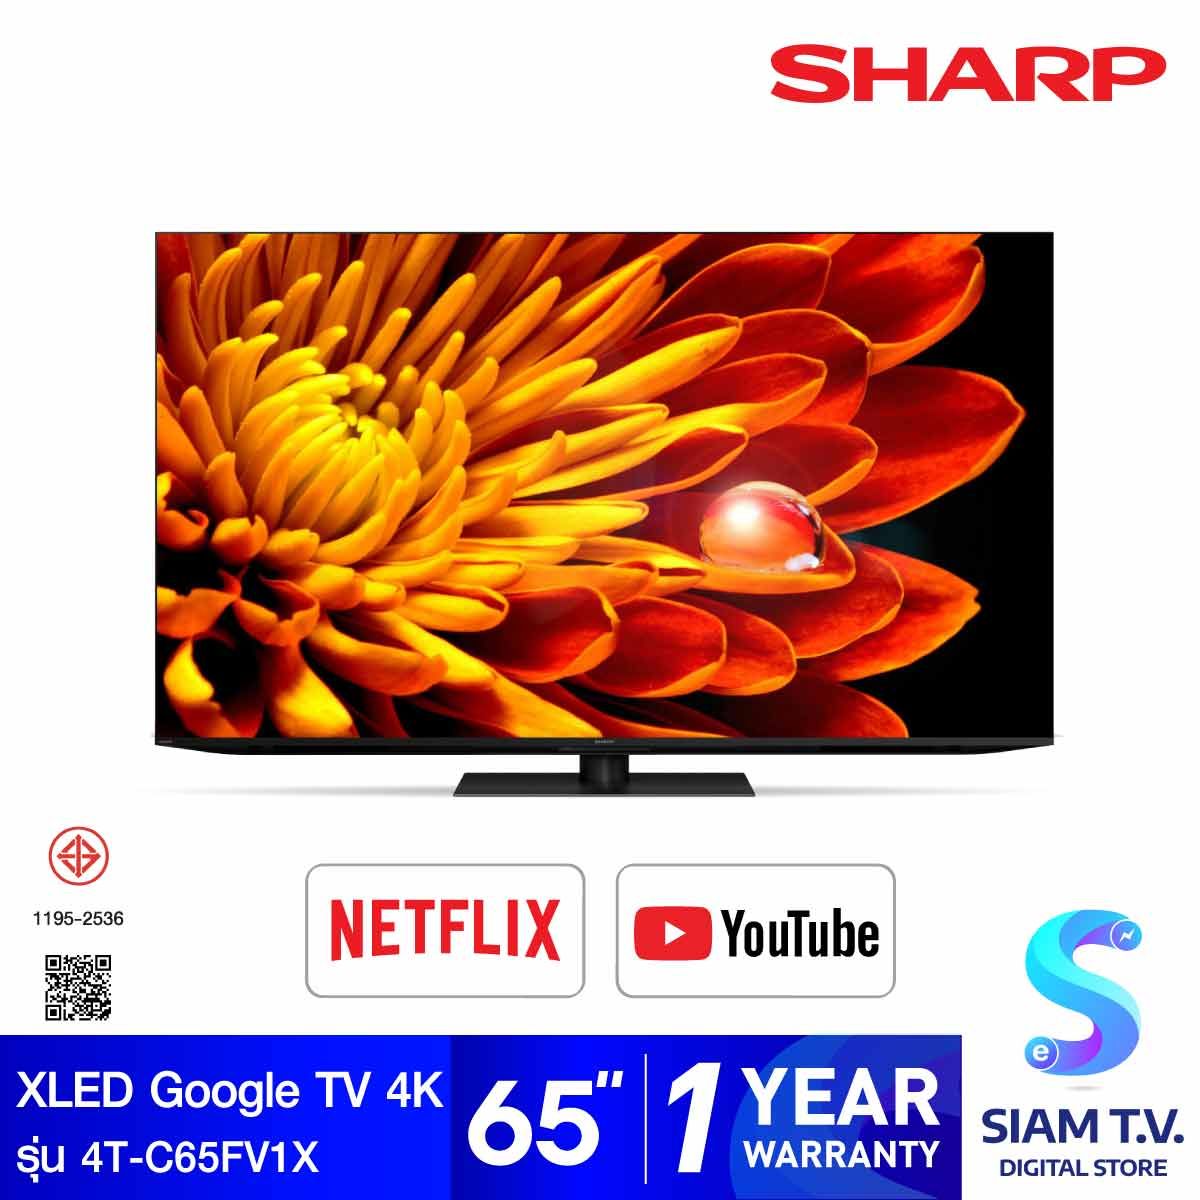 SHARP AQUOS XLED MINI LED Google TV 4K 120Hz รุ่น C65FV1X  สมาร์ททีวี 65 นิ้ว ปี2023